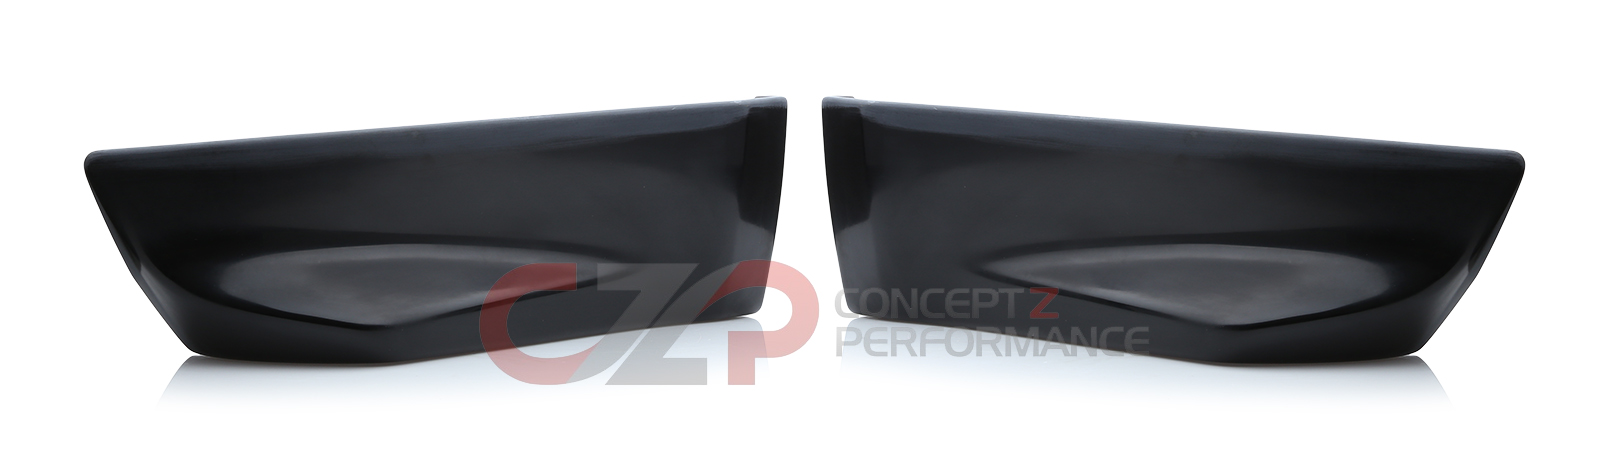 Zele GT Rear Under Spoiler Set FRP - Infiniti G37 08-13 & Q60 14-15 Coupe CV36